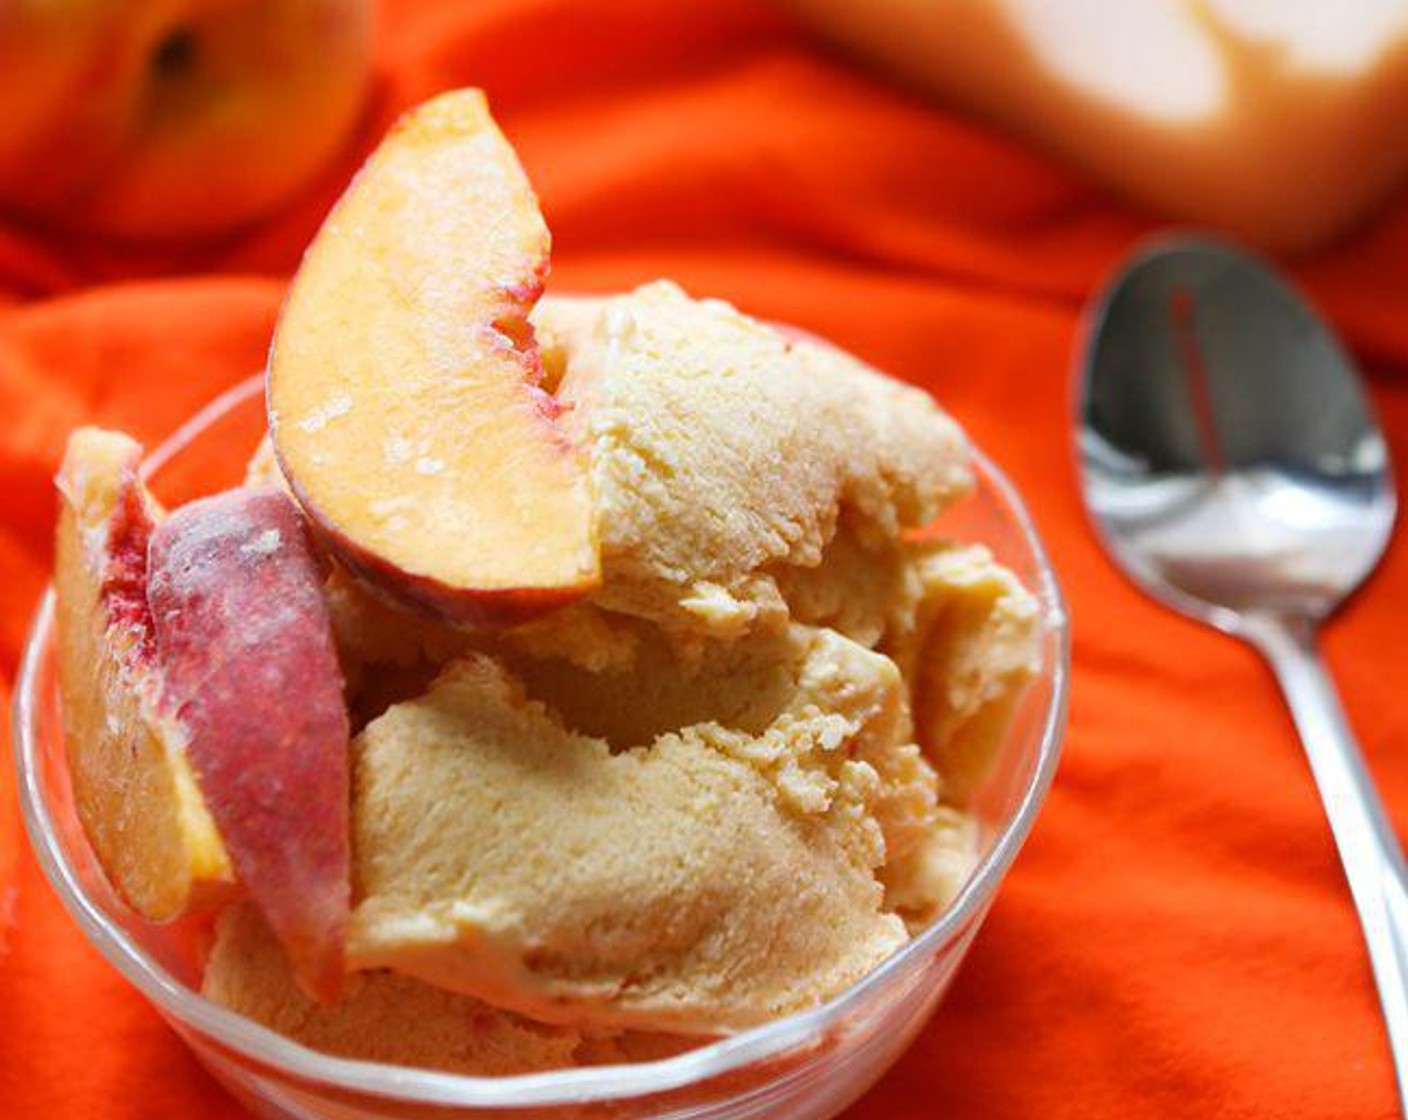 Peach Frozen Yogurt